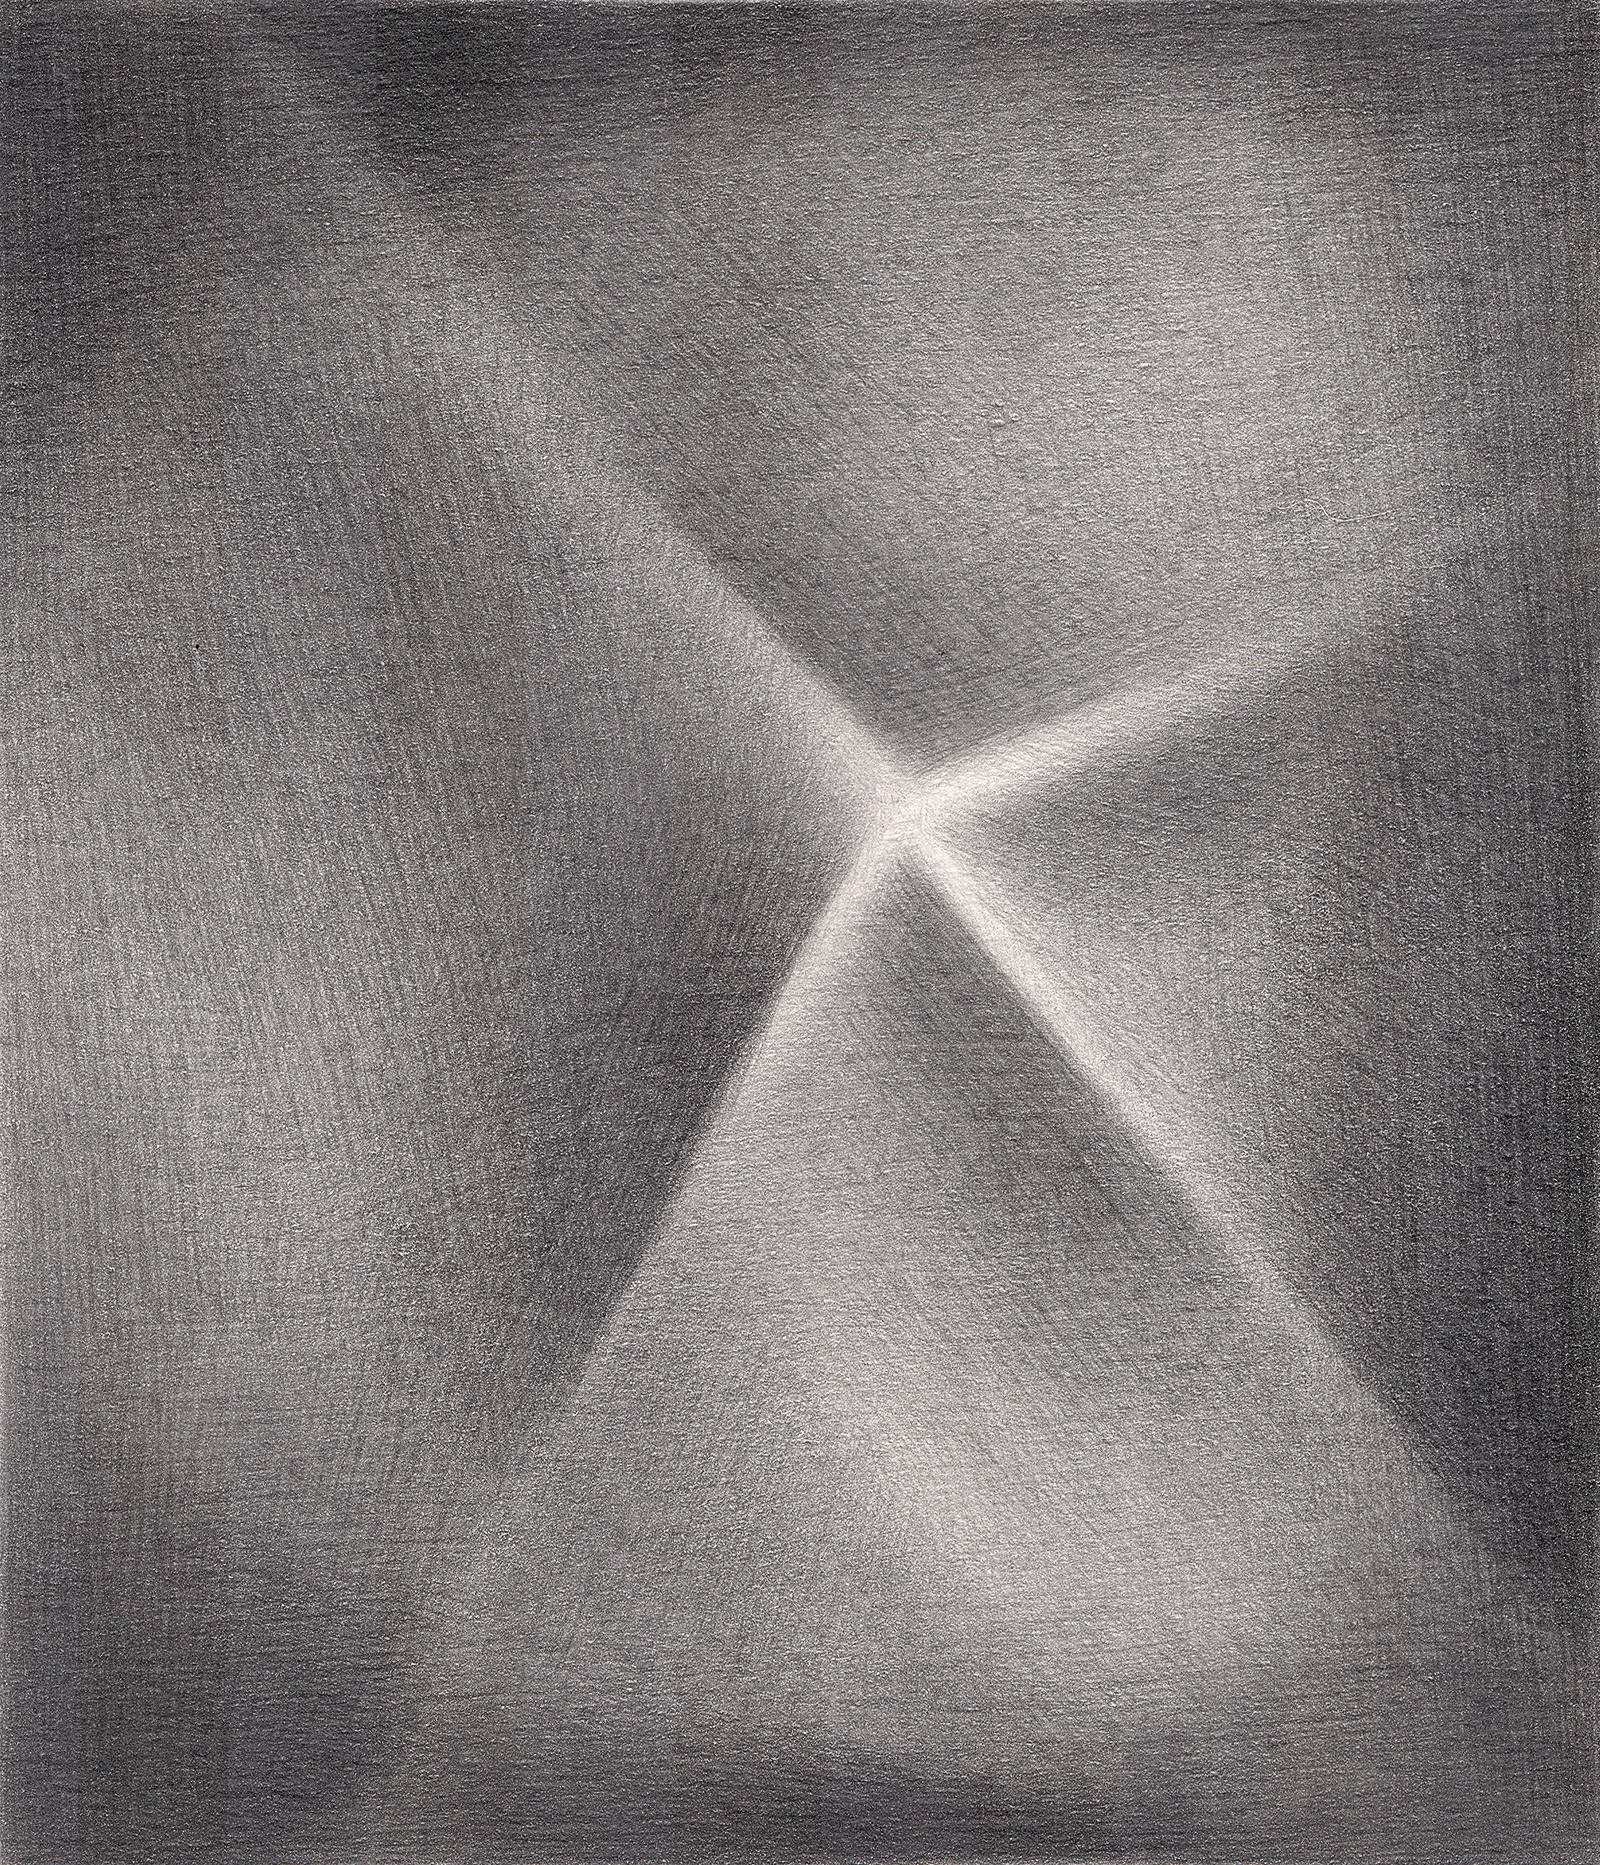   Sentimental Device , 2007. Graphite on paper. 6" x 7". 